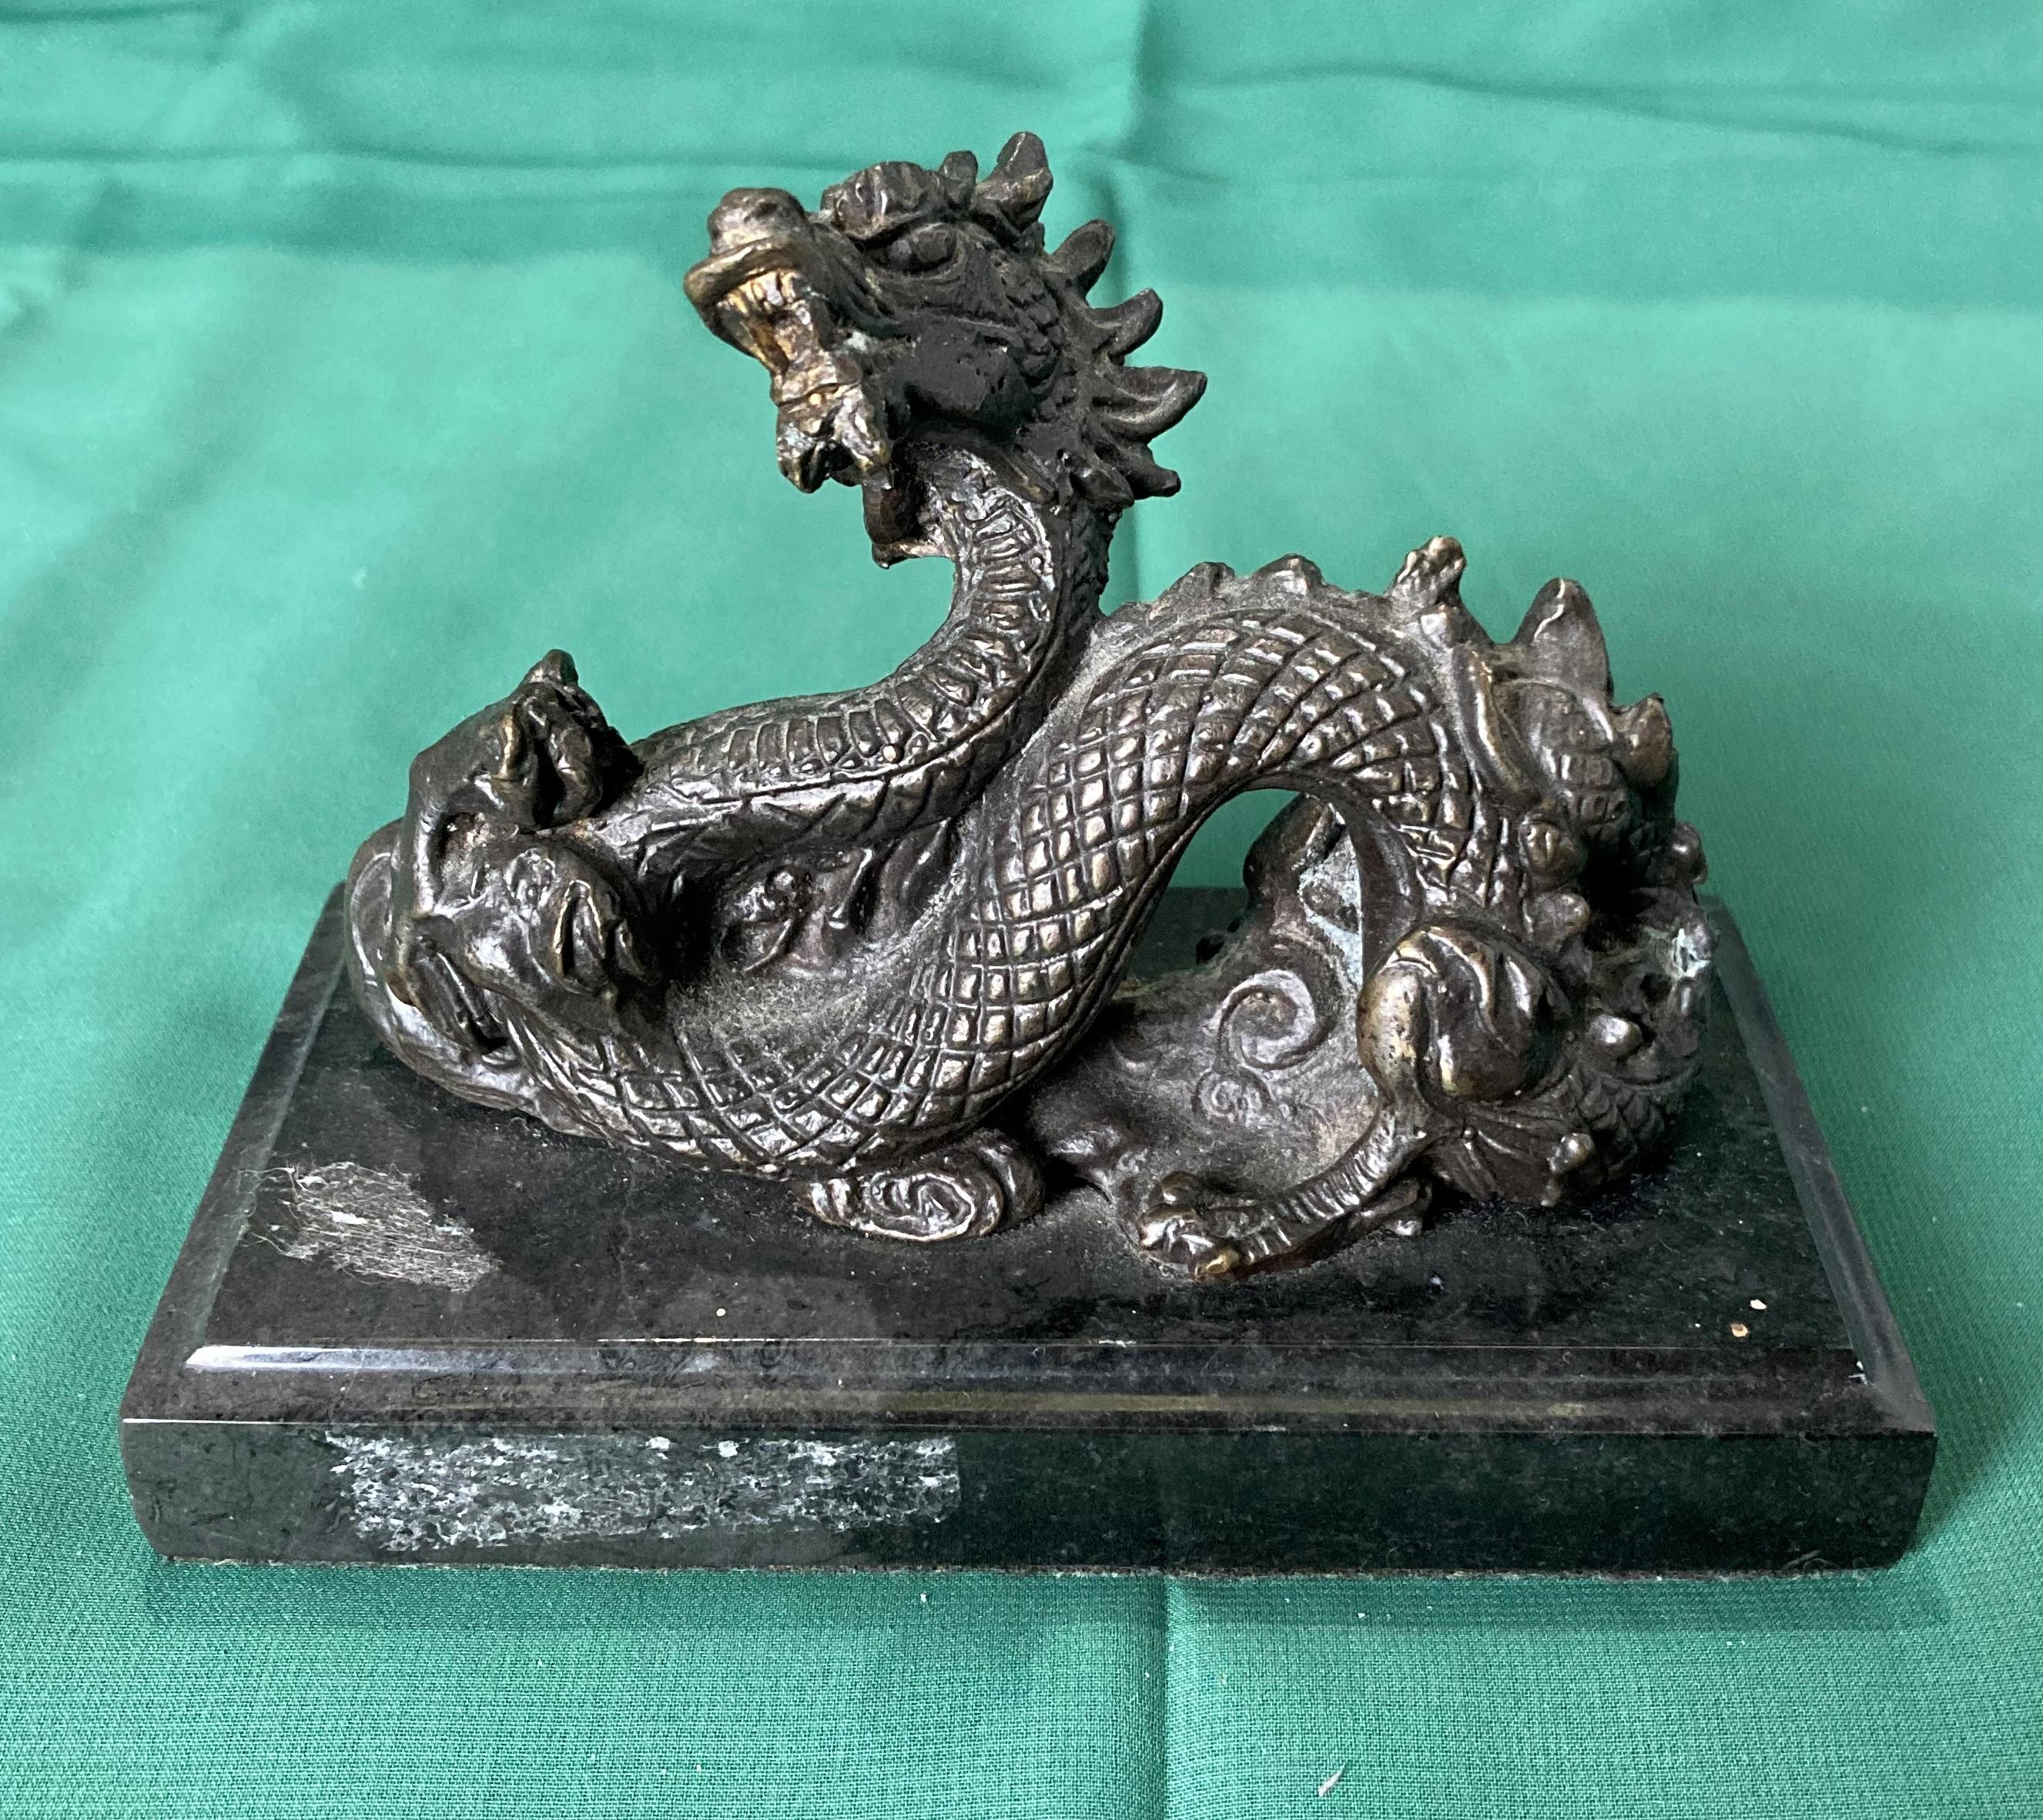 Bronze dragon sculpture on black marble base, 10cm high x 13.